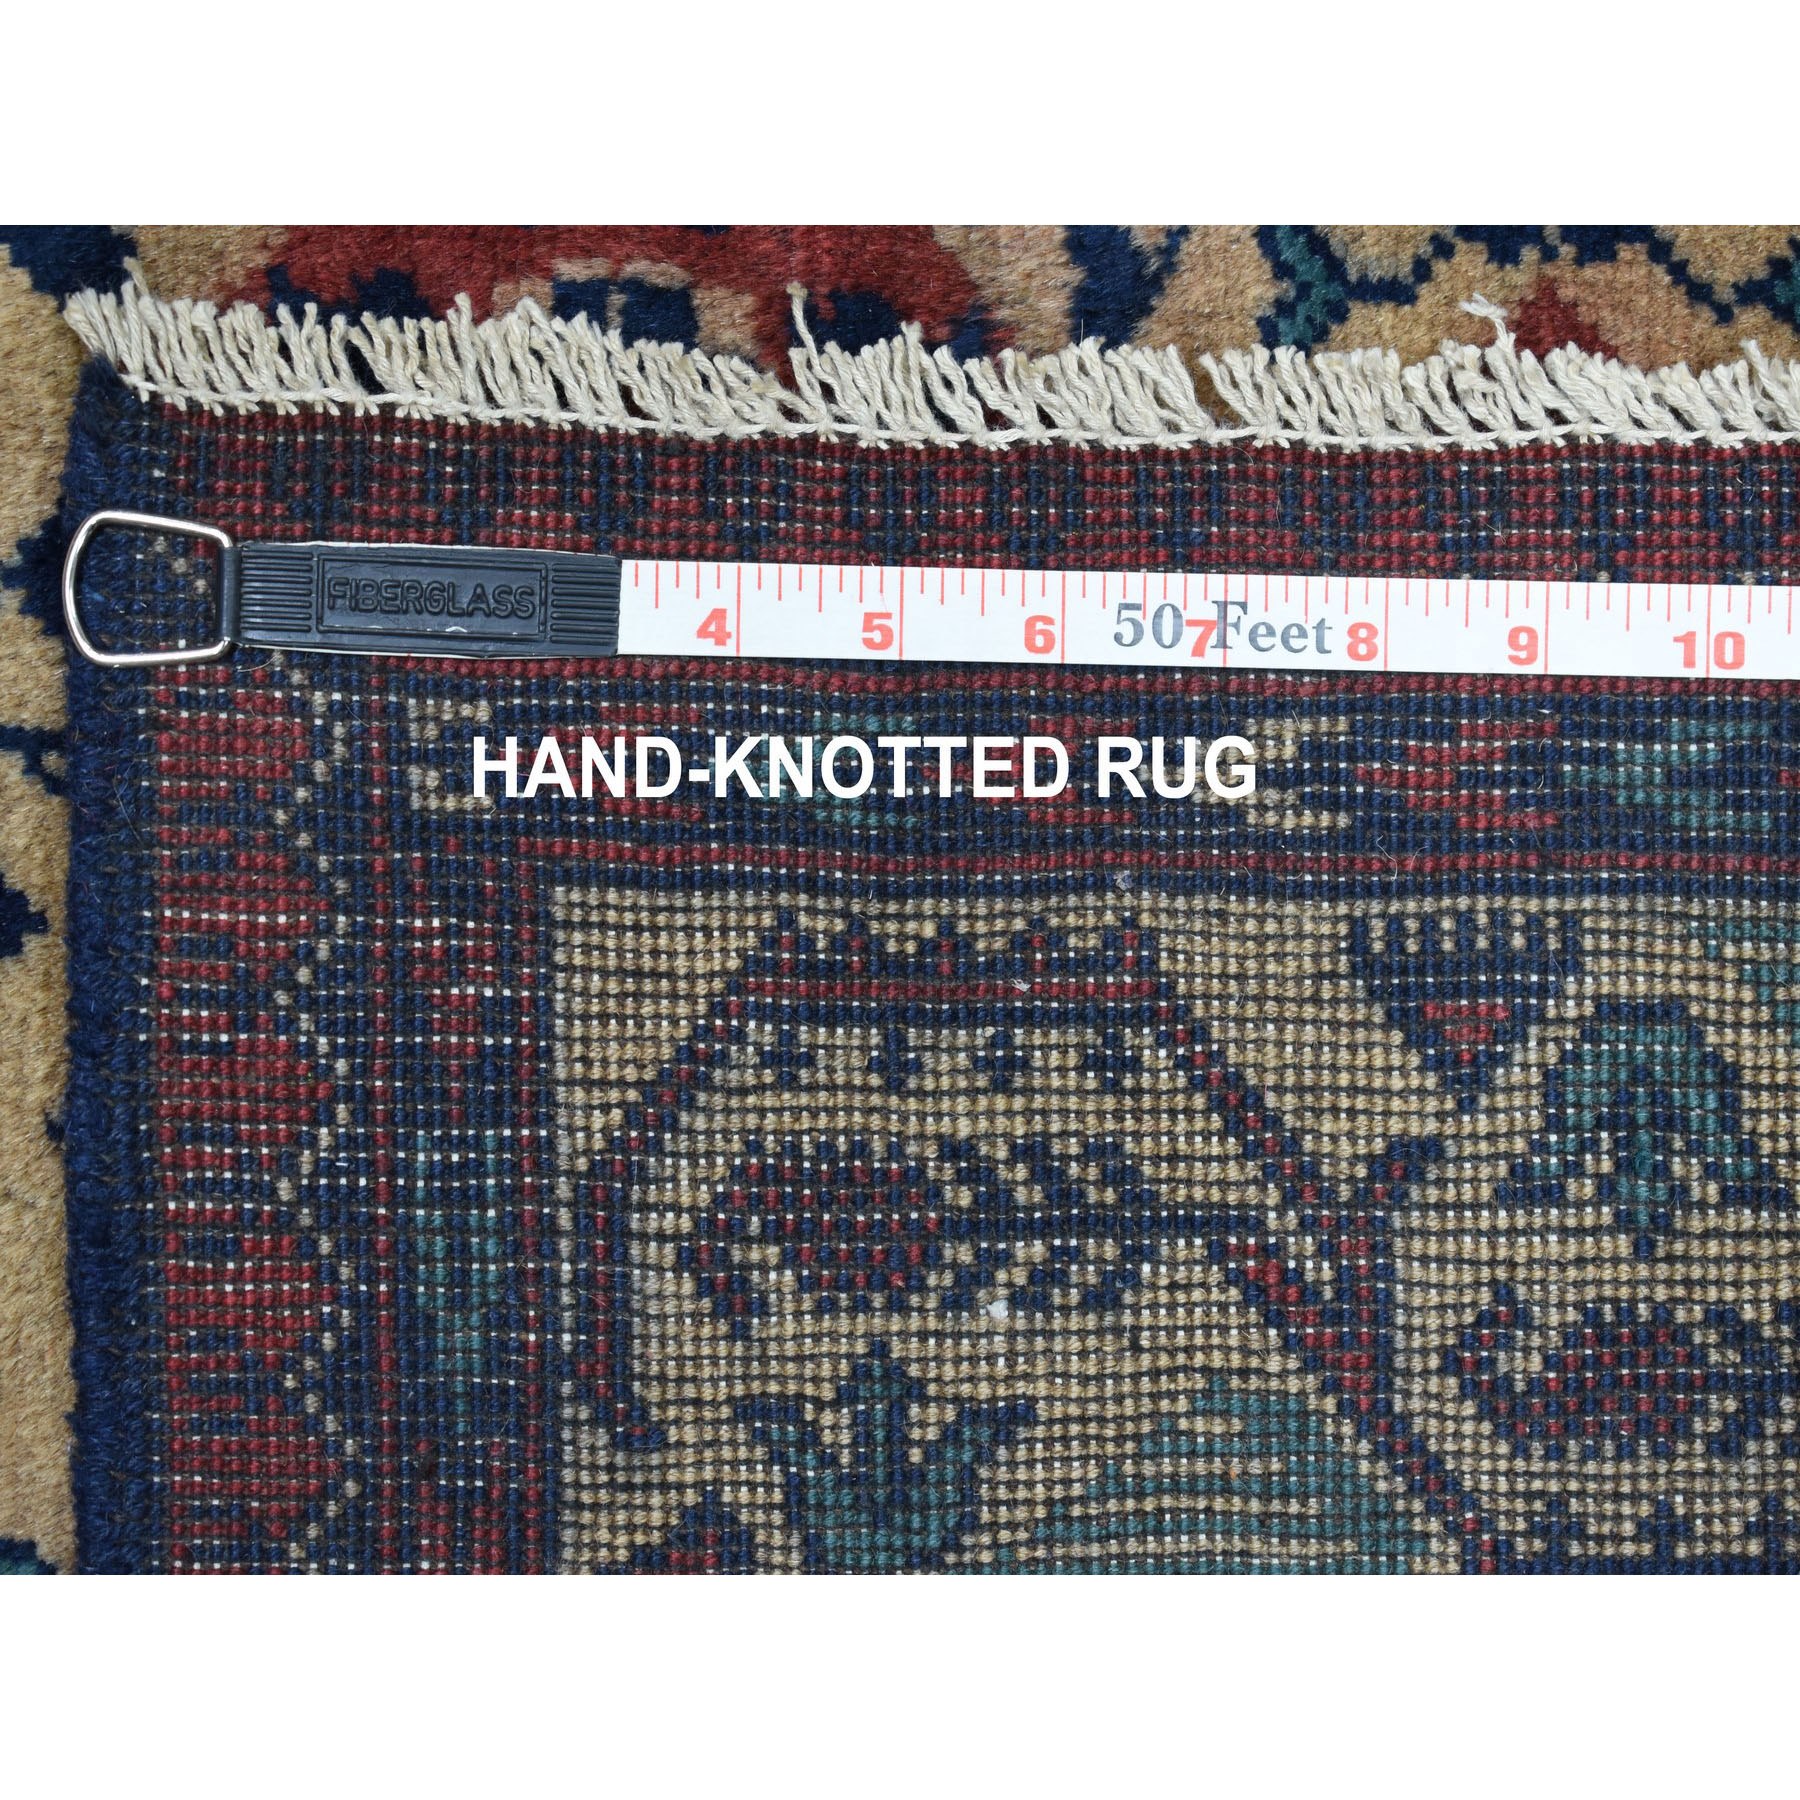 5-7 x7- Vintage Look Geometric Afghan Andkhoy Pure Wool Hand Knotted Oriental Rug 